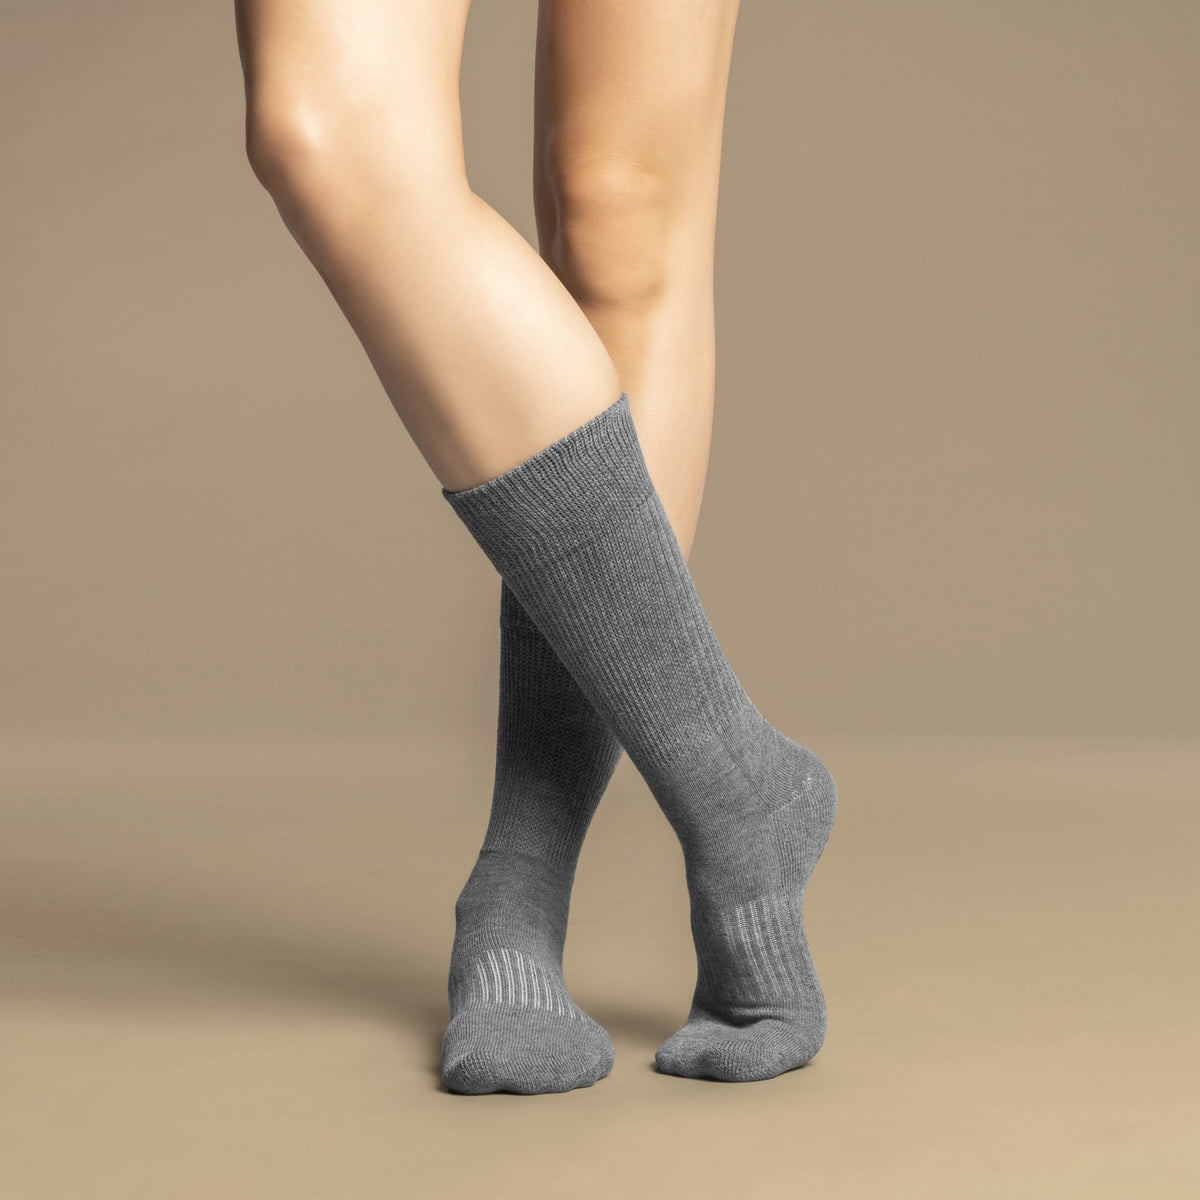 Grip Socks for Men - Casual Comfort Crew x3 Pairs - Gripjoy Socks